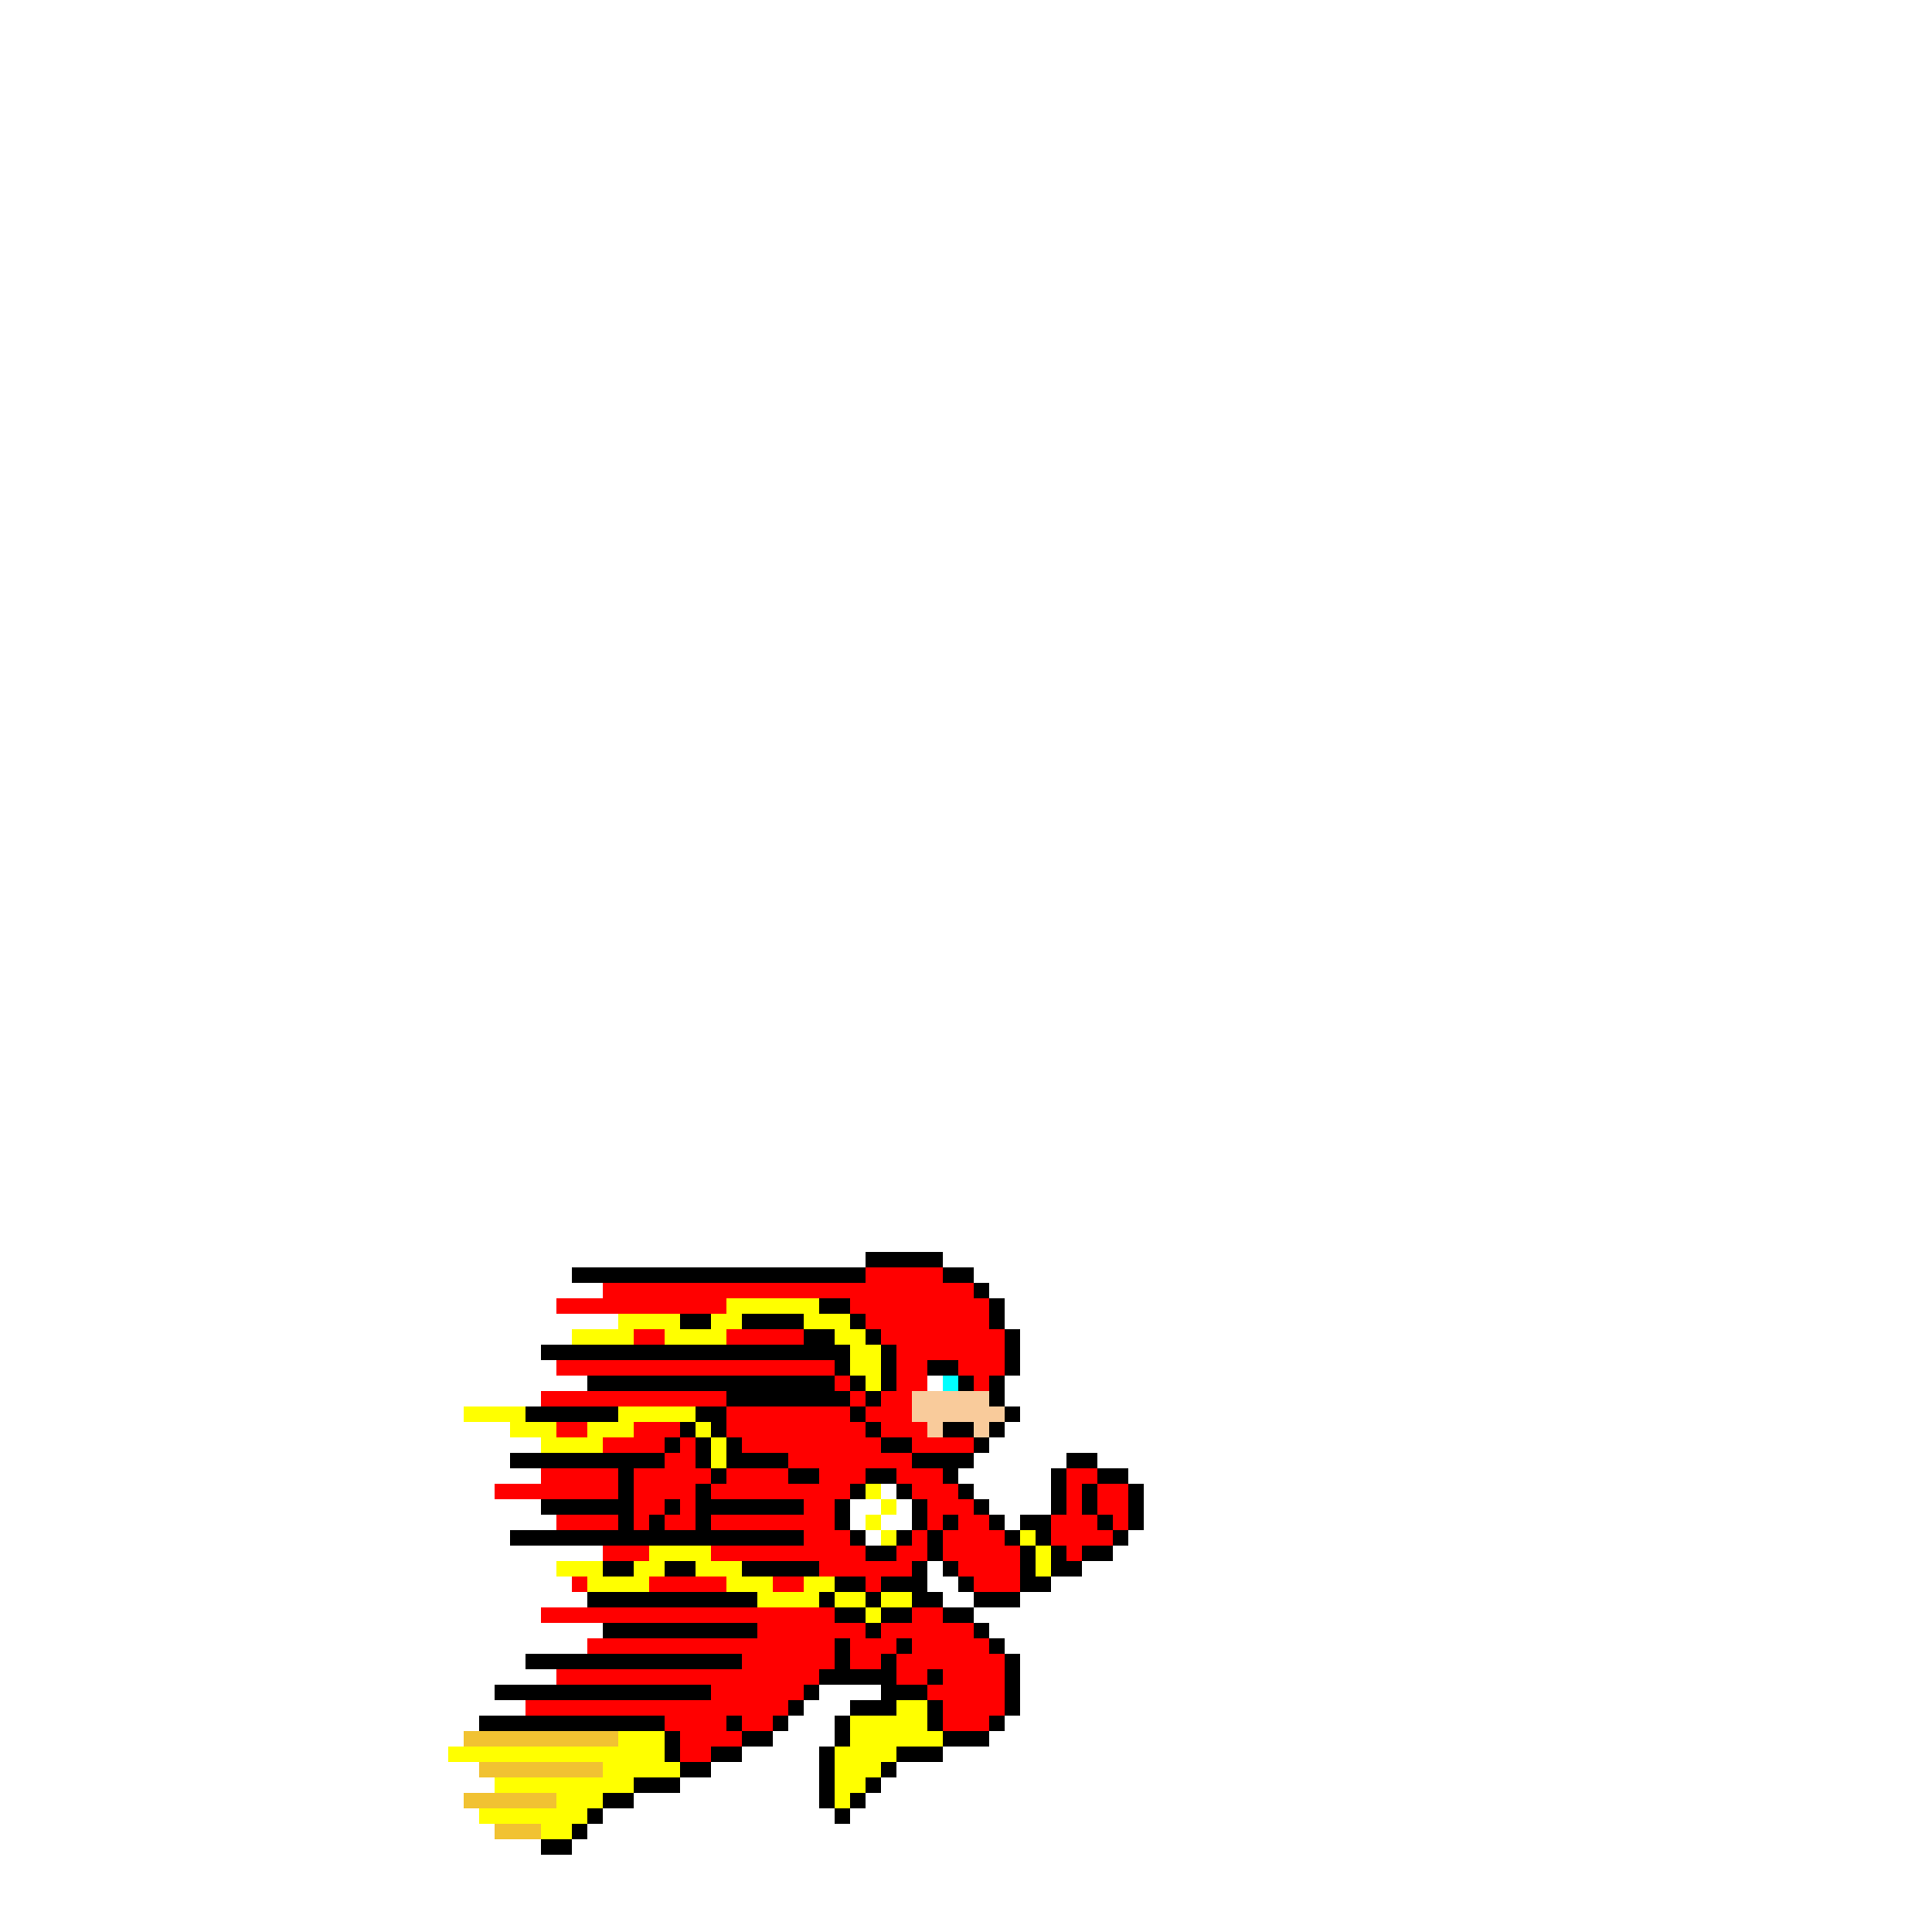 The Flash’s (running)